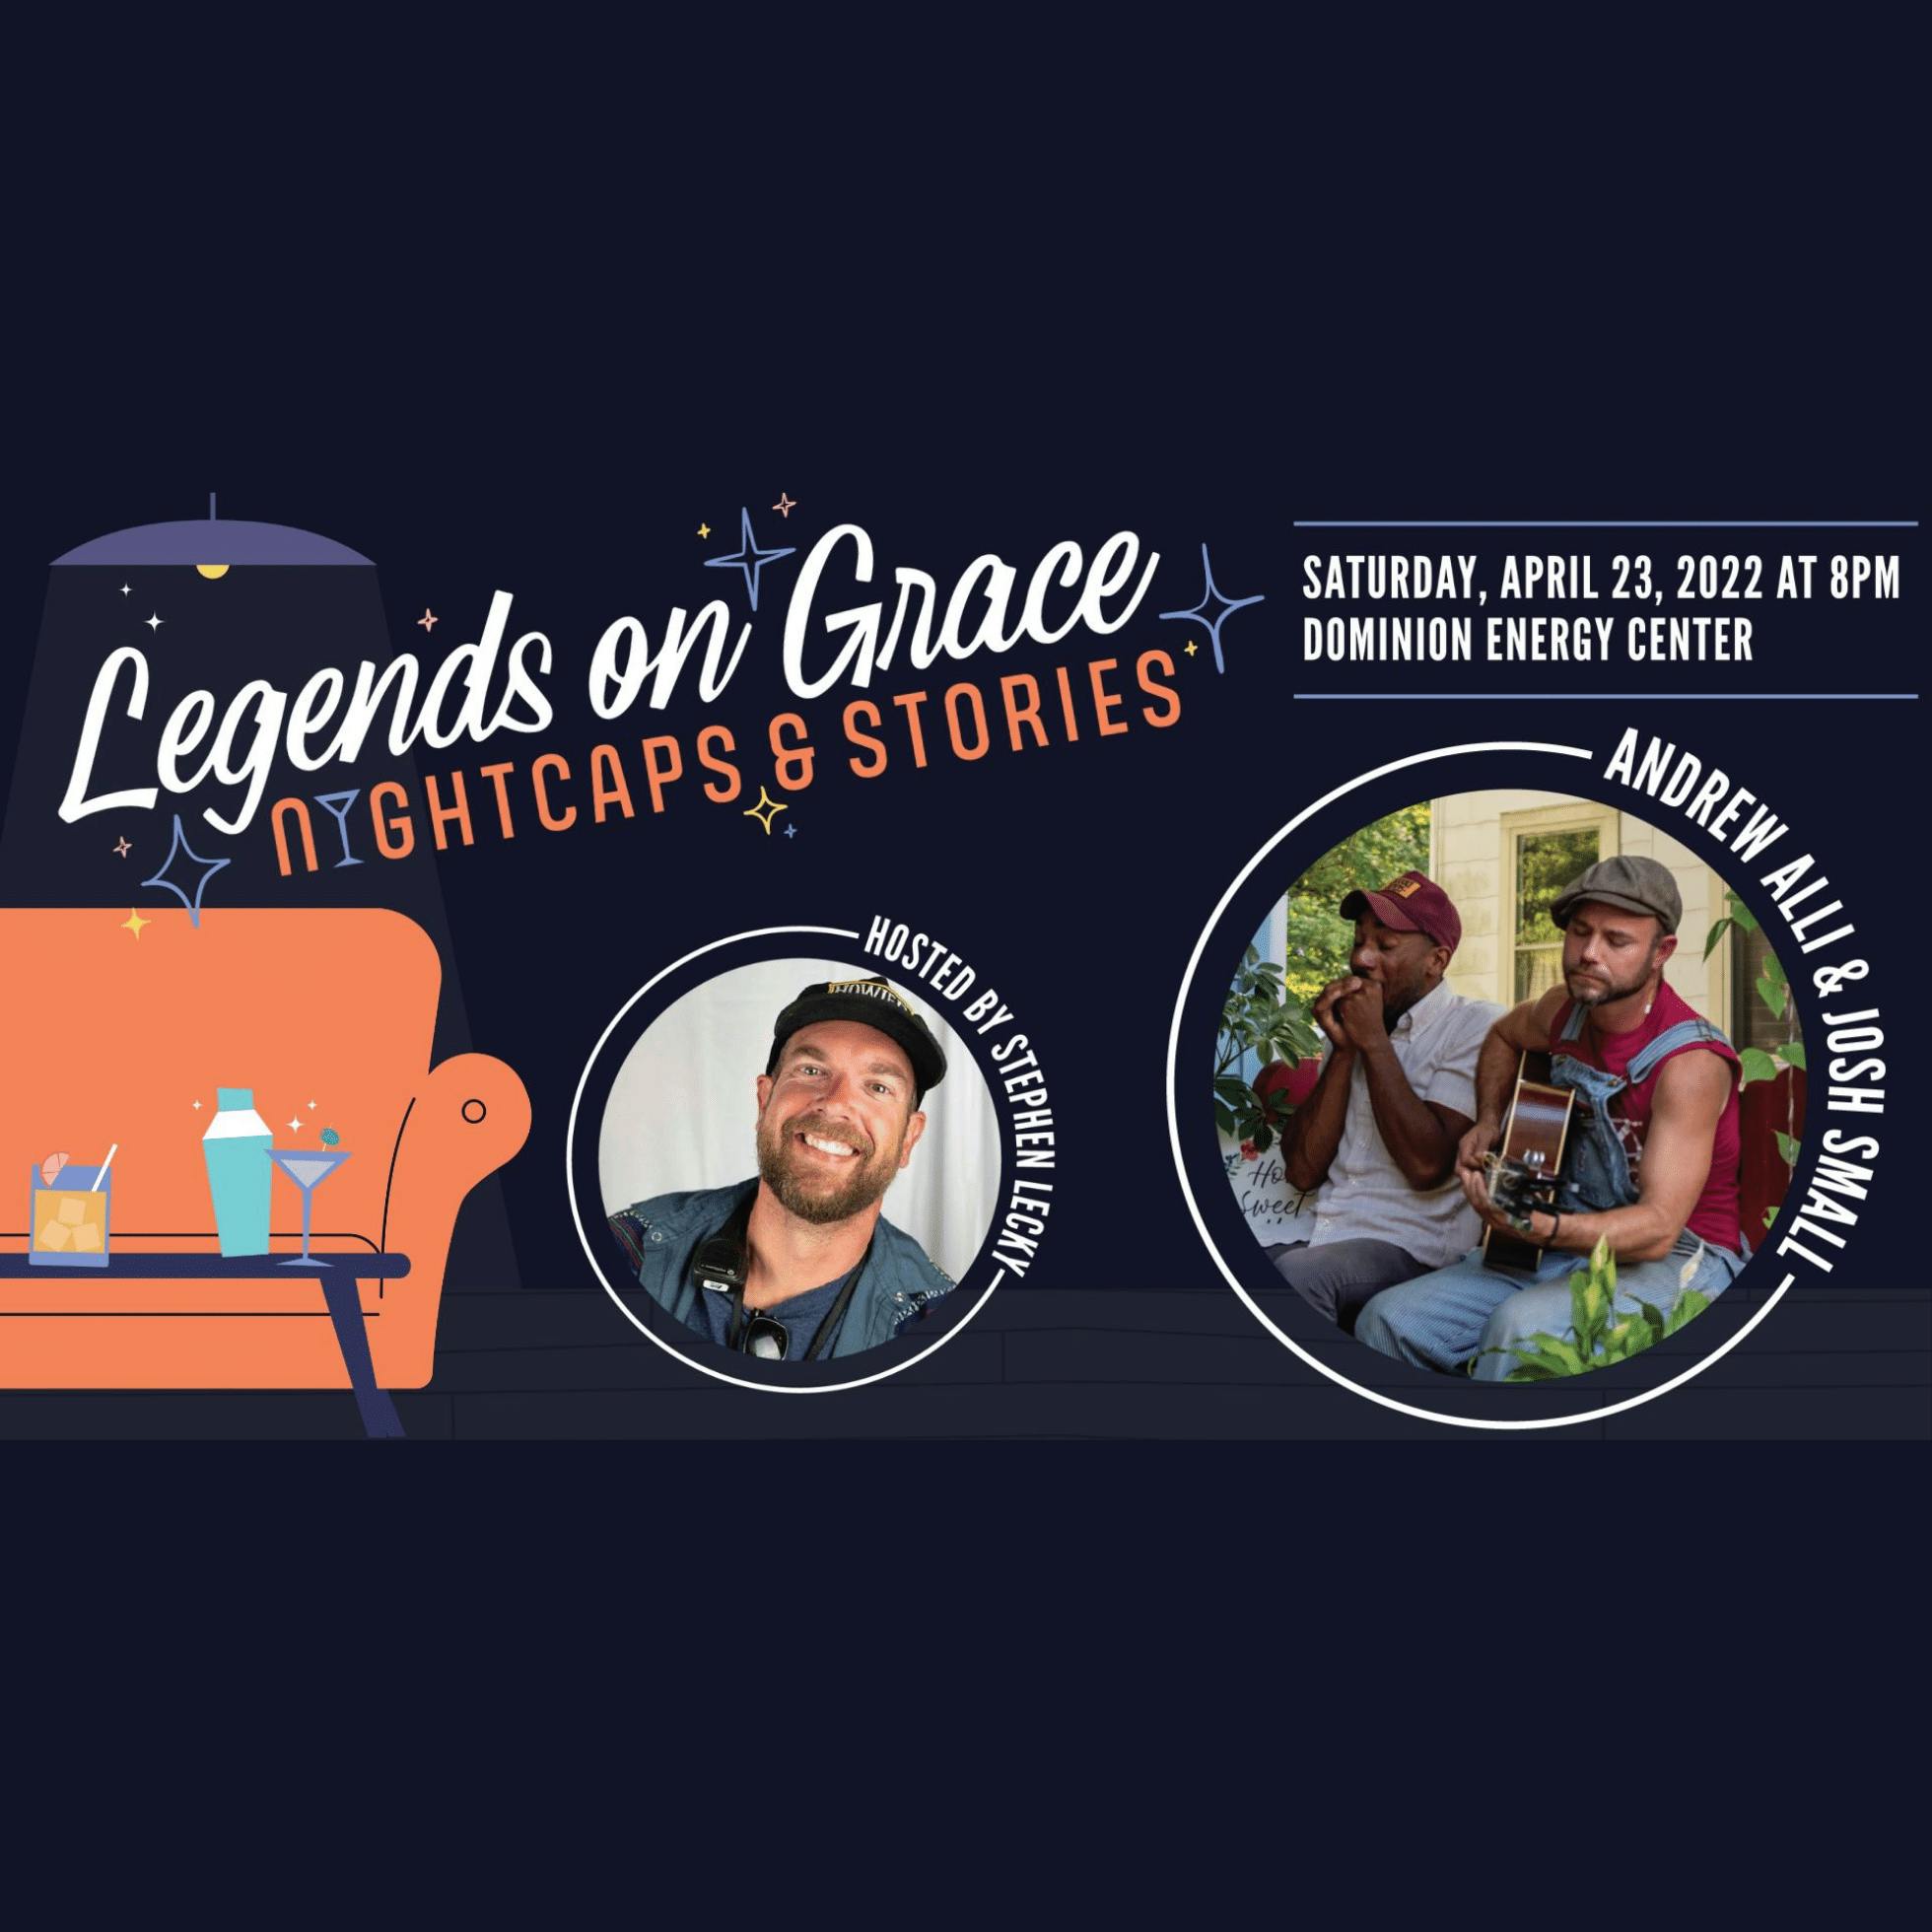 Legends on Grace: Nightcaps & Stories